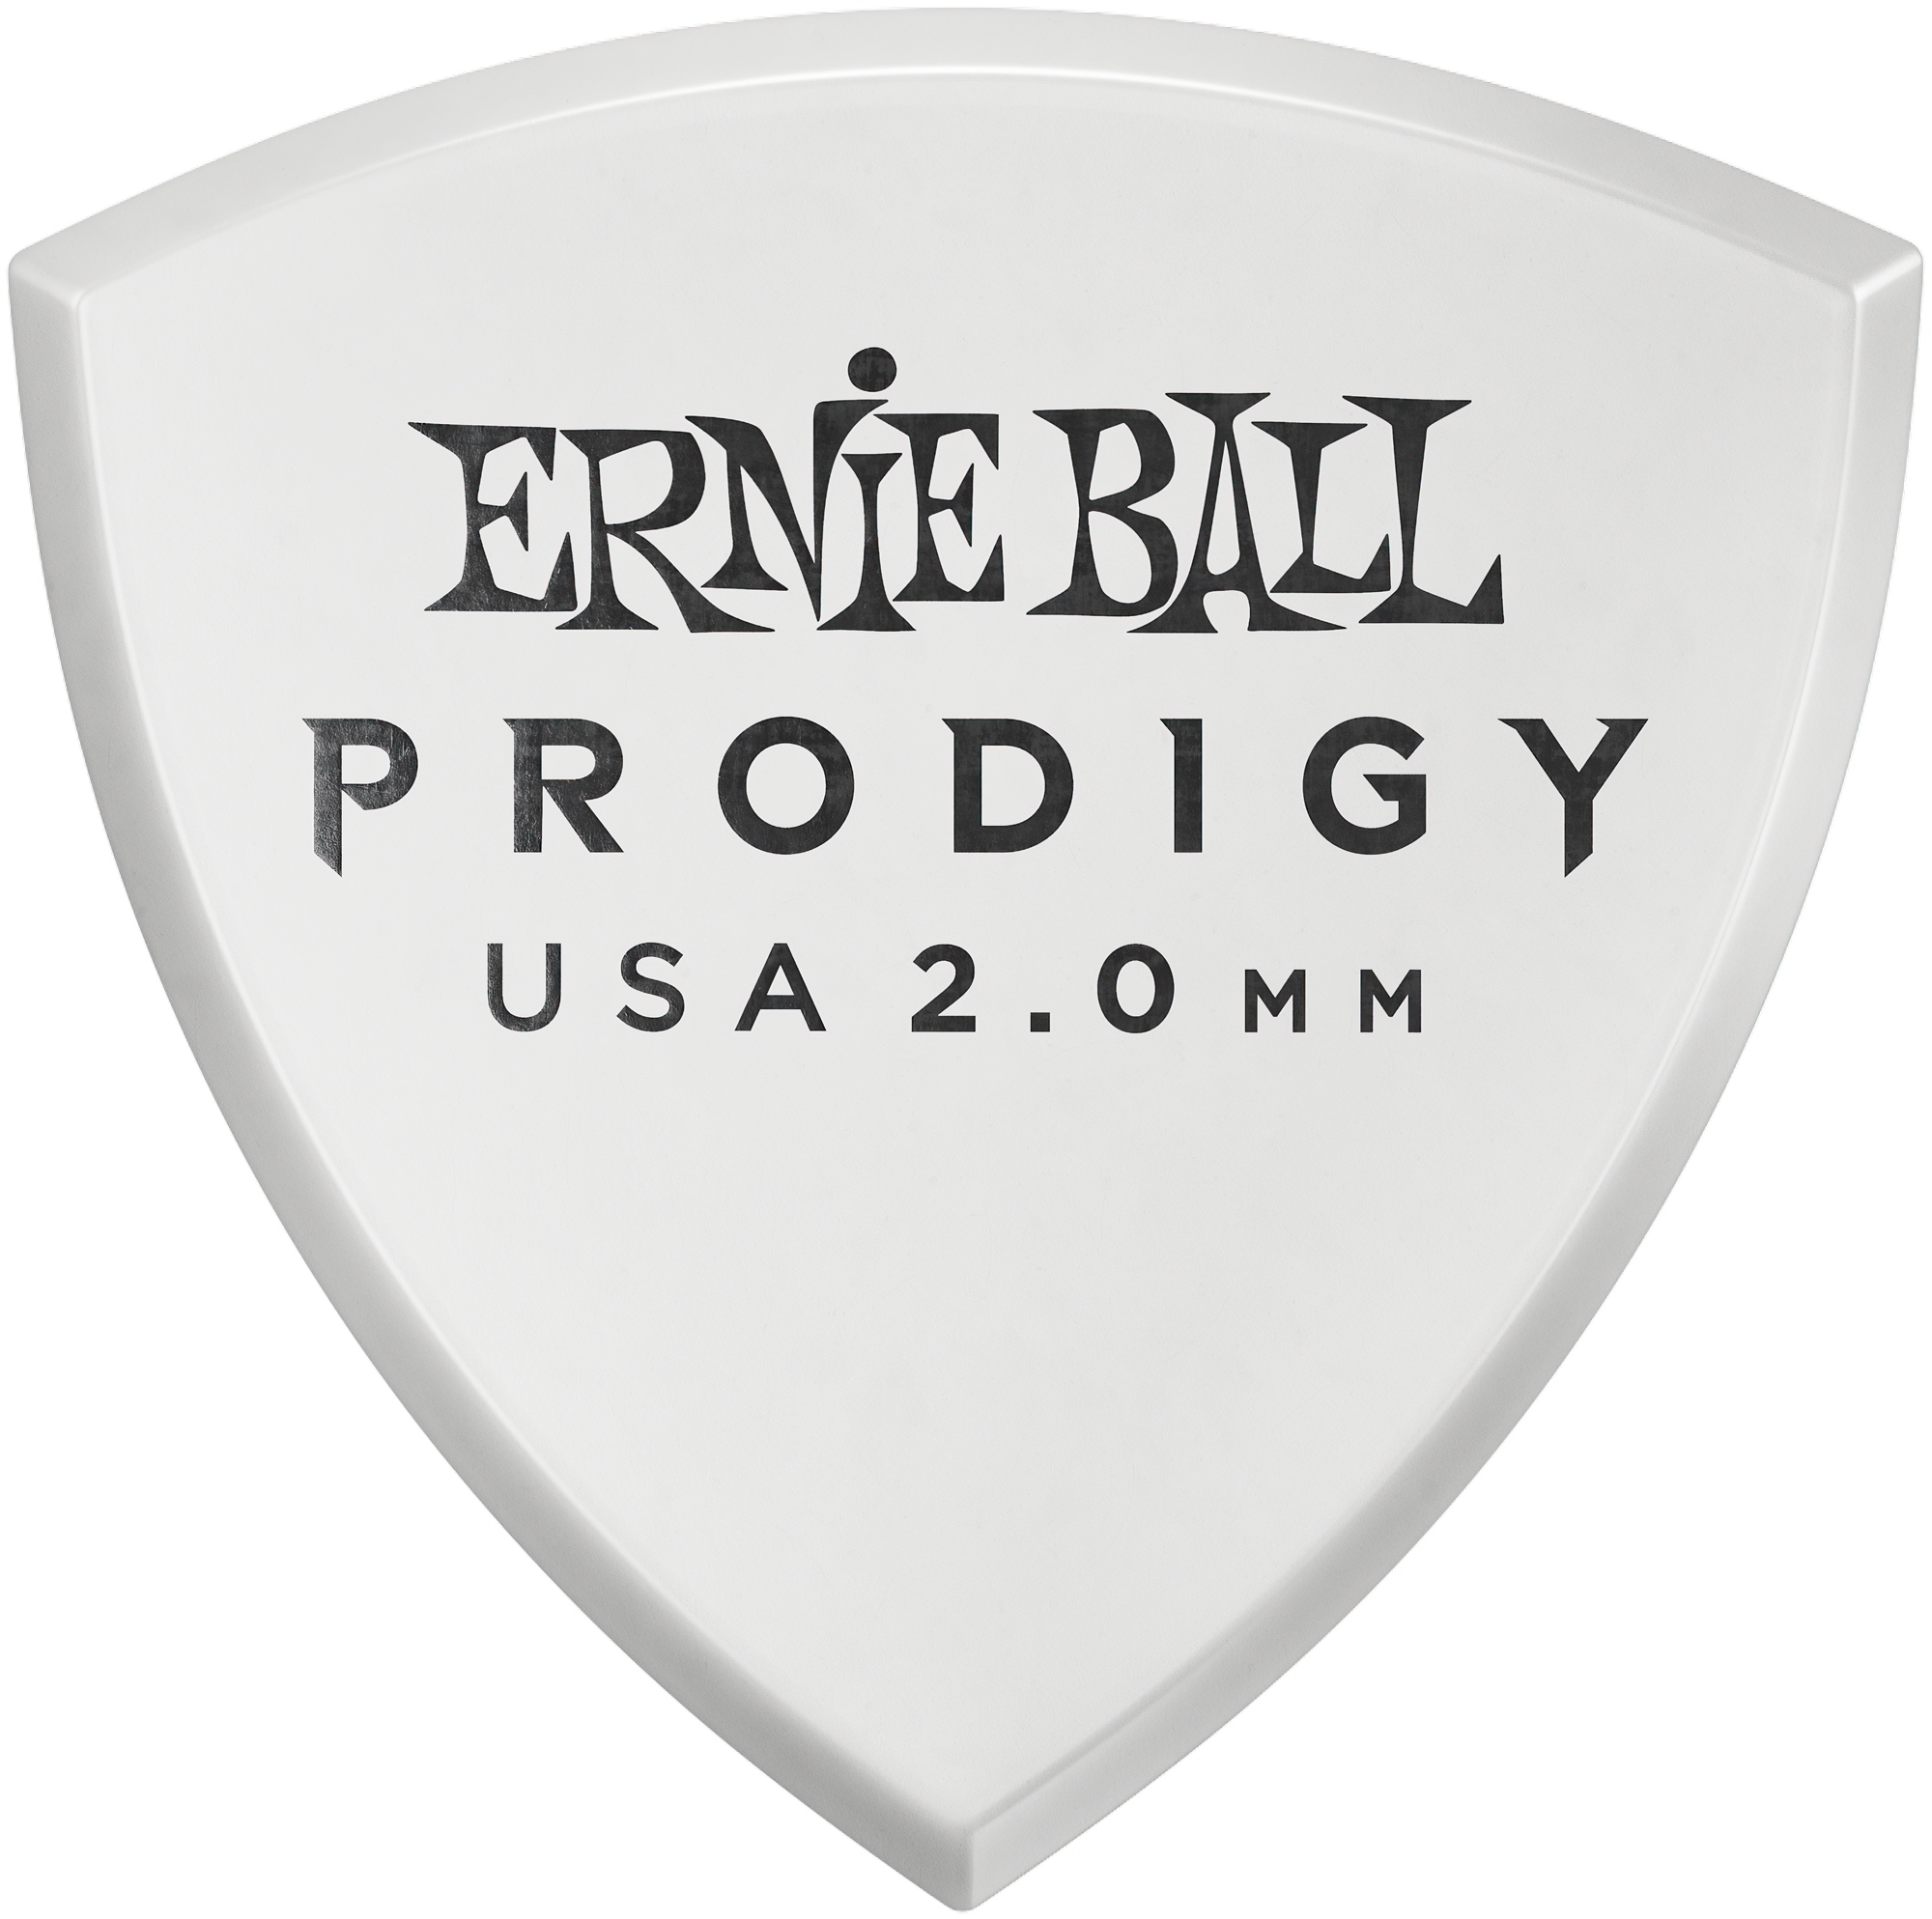 ERNIE BALL Plektren, Prodigy, Large Shield, 2,00mm, weiß, 6 Stüc